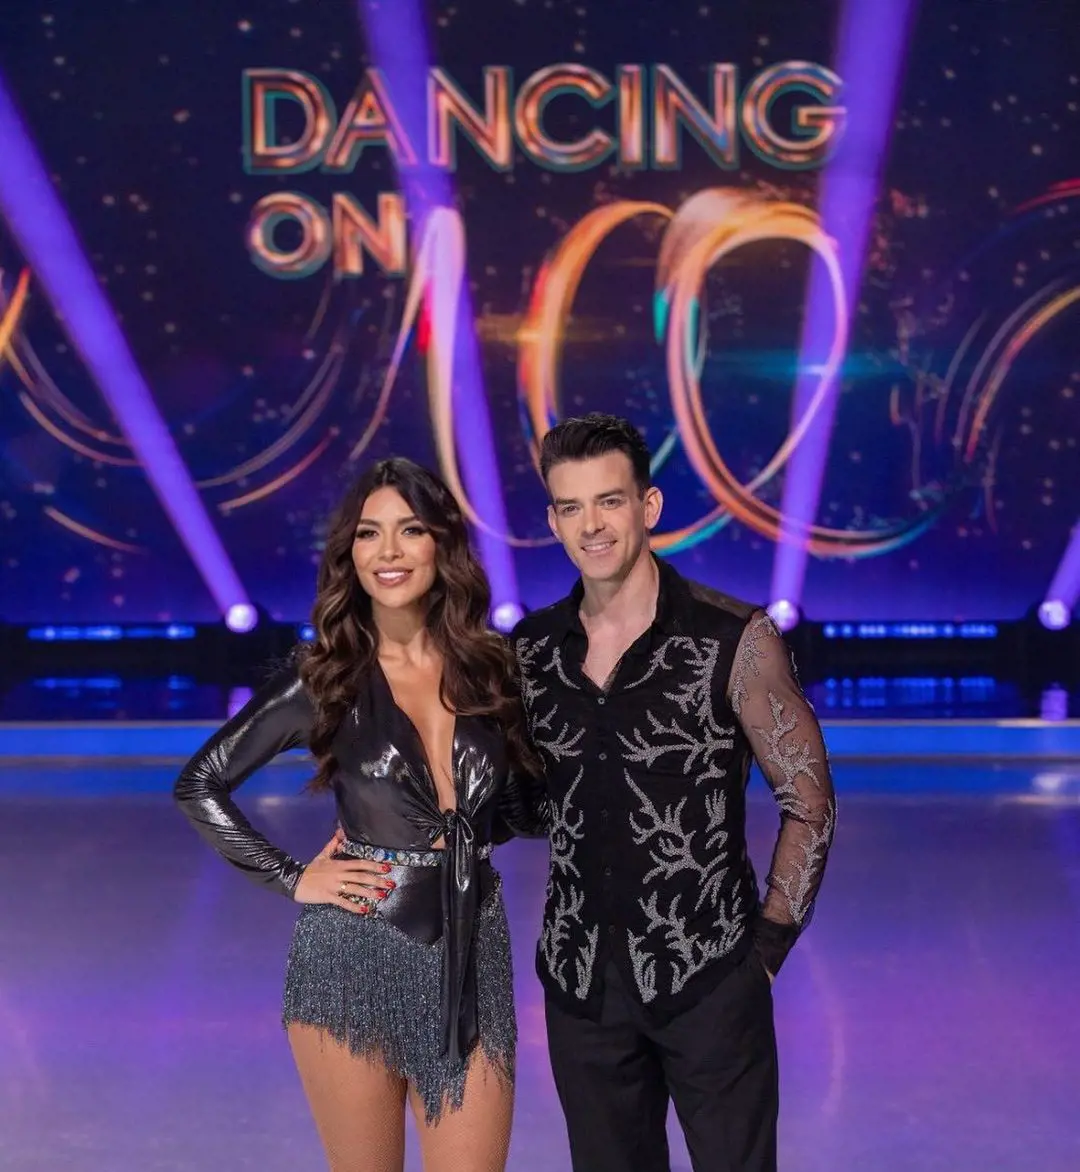 Ekin and Brendyn are dance partners in Dancing On Ice season 15